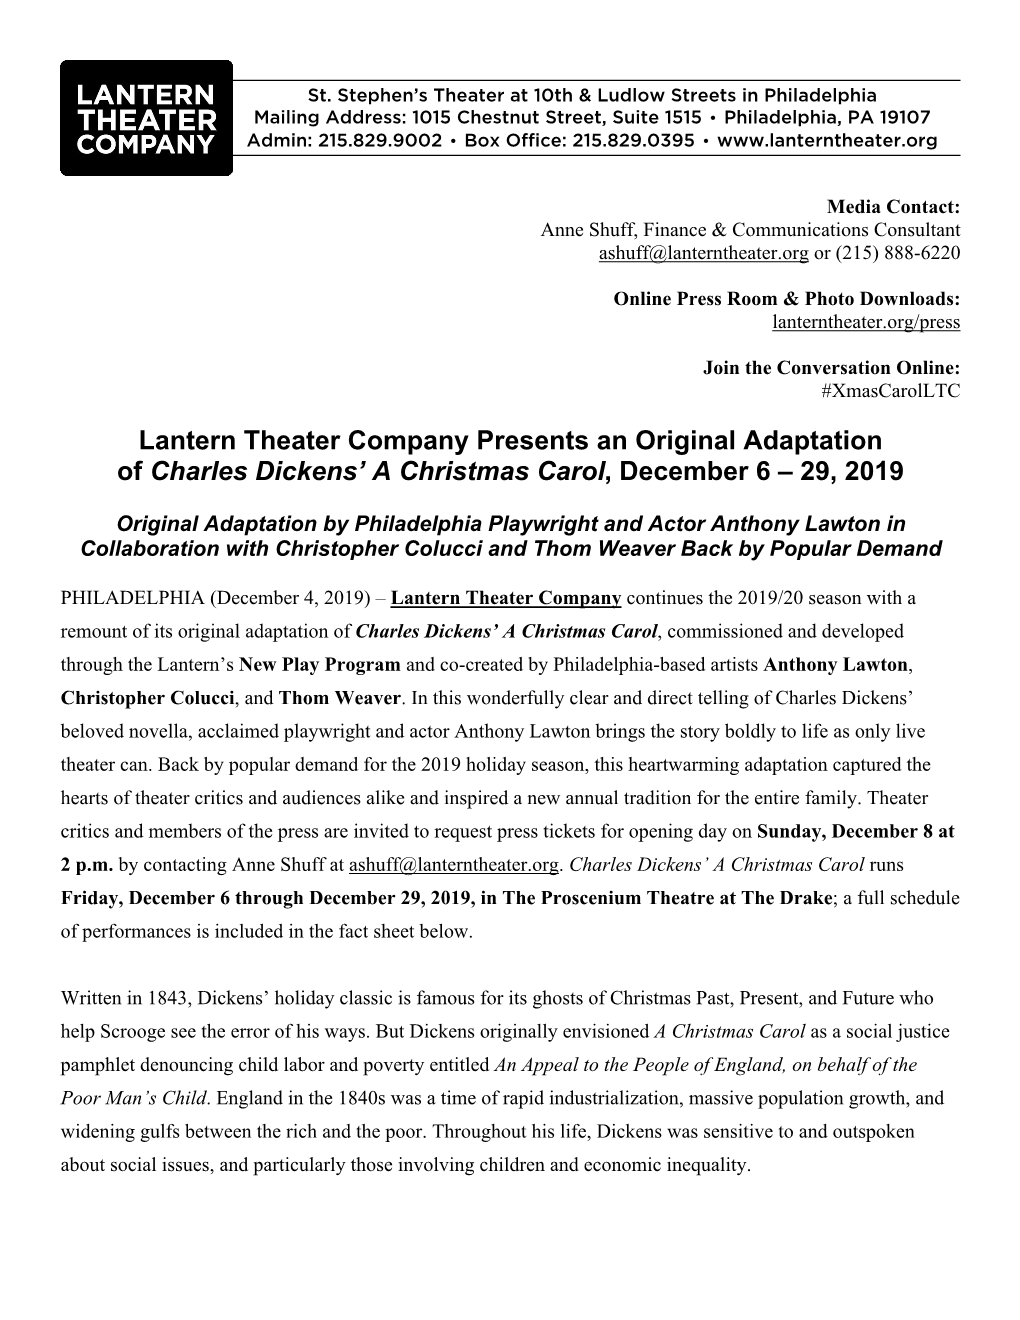 Lantern Theater Company Presents an Original Adaptation of Charles Dickens’ a Christmas Carol, December 6 – 29, 2019